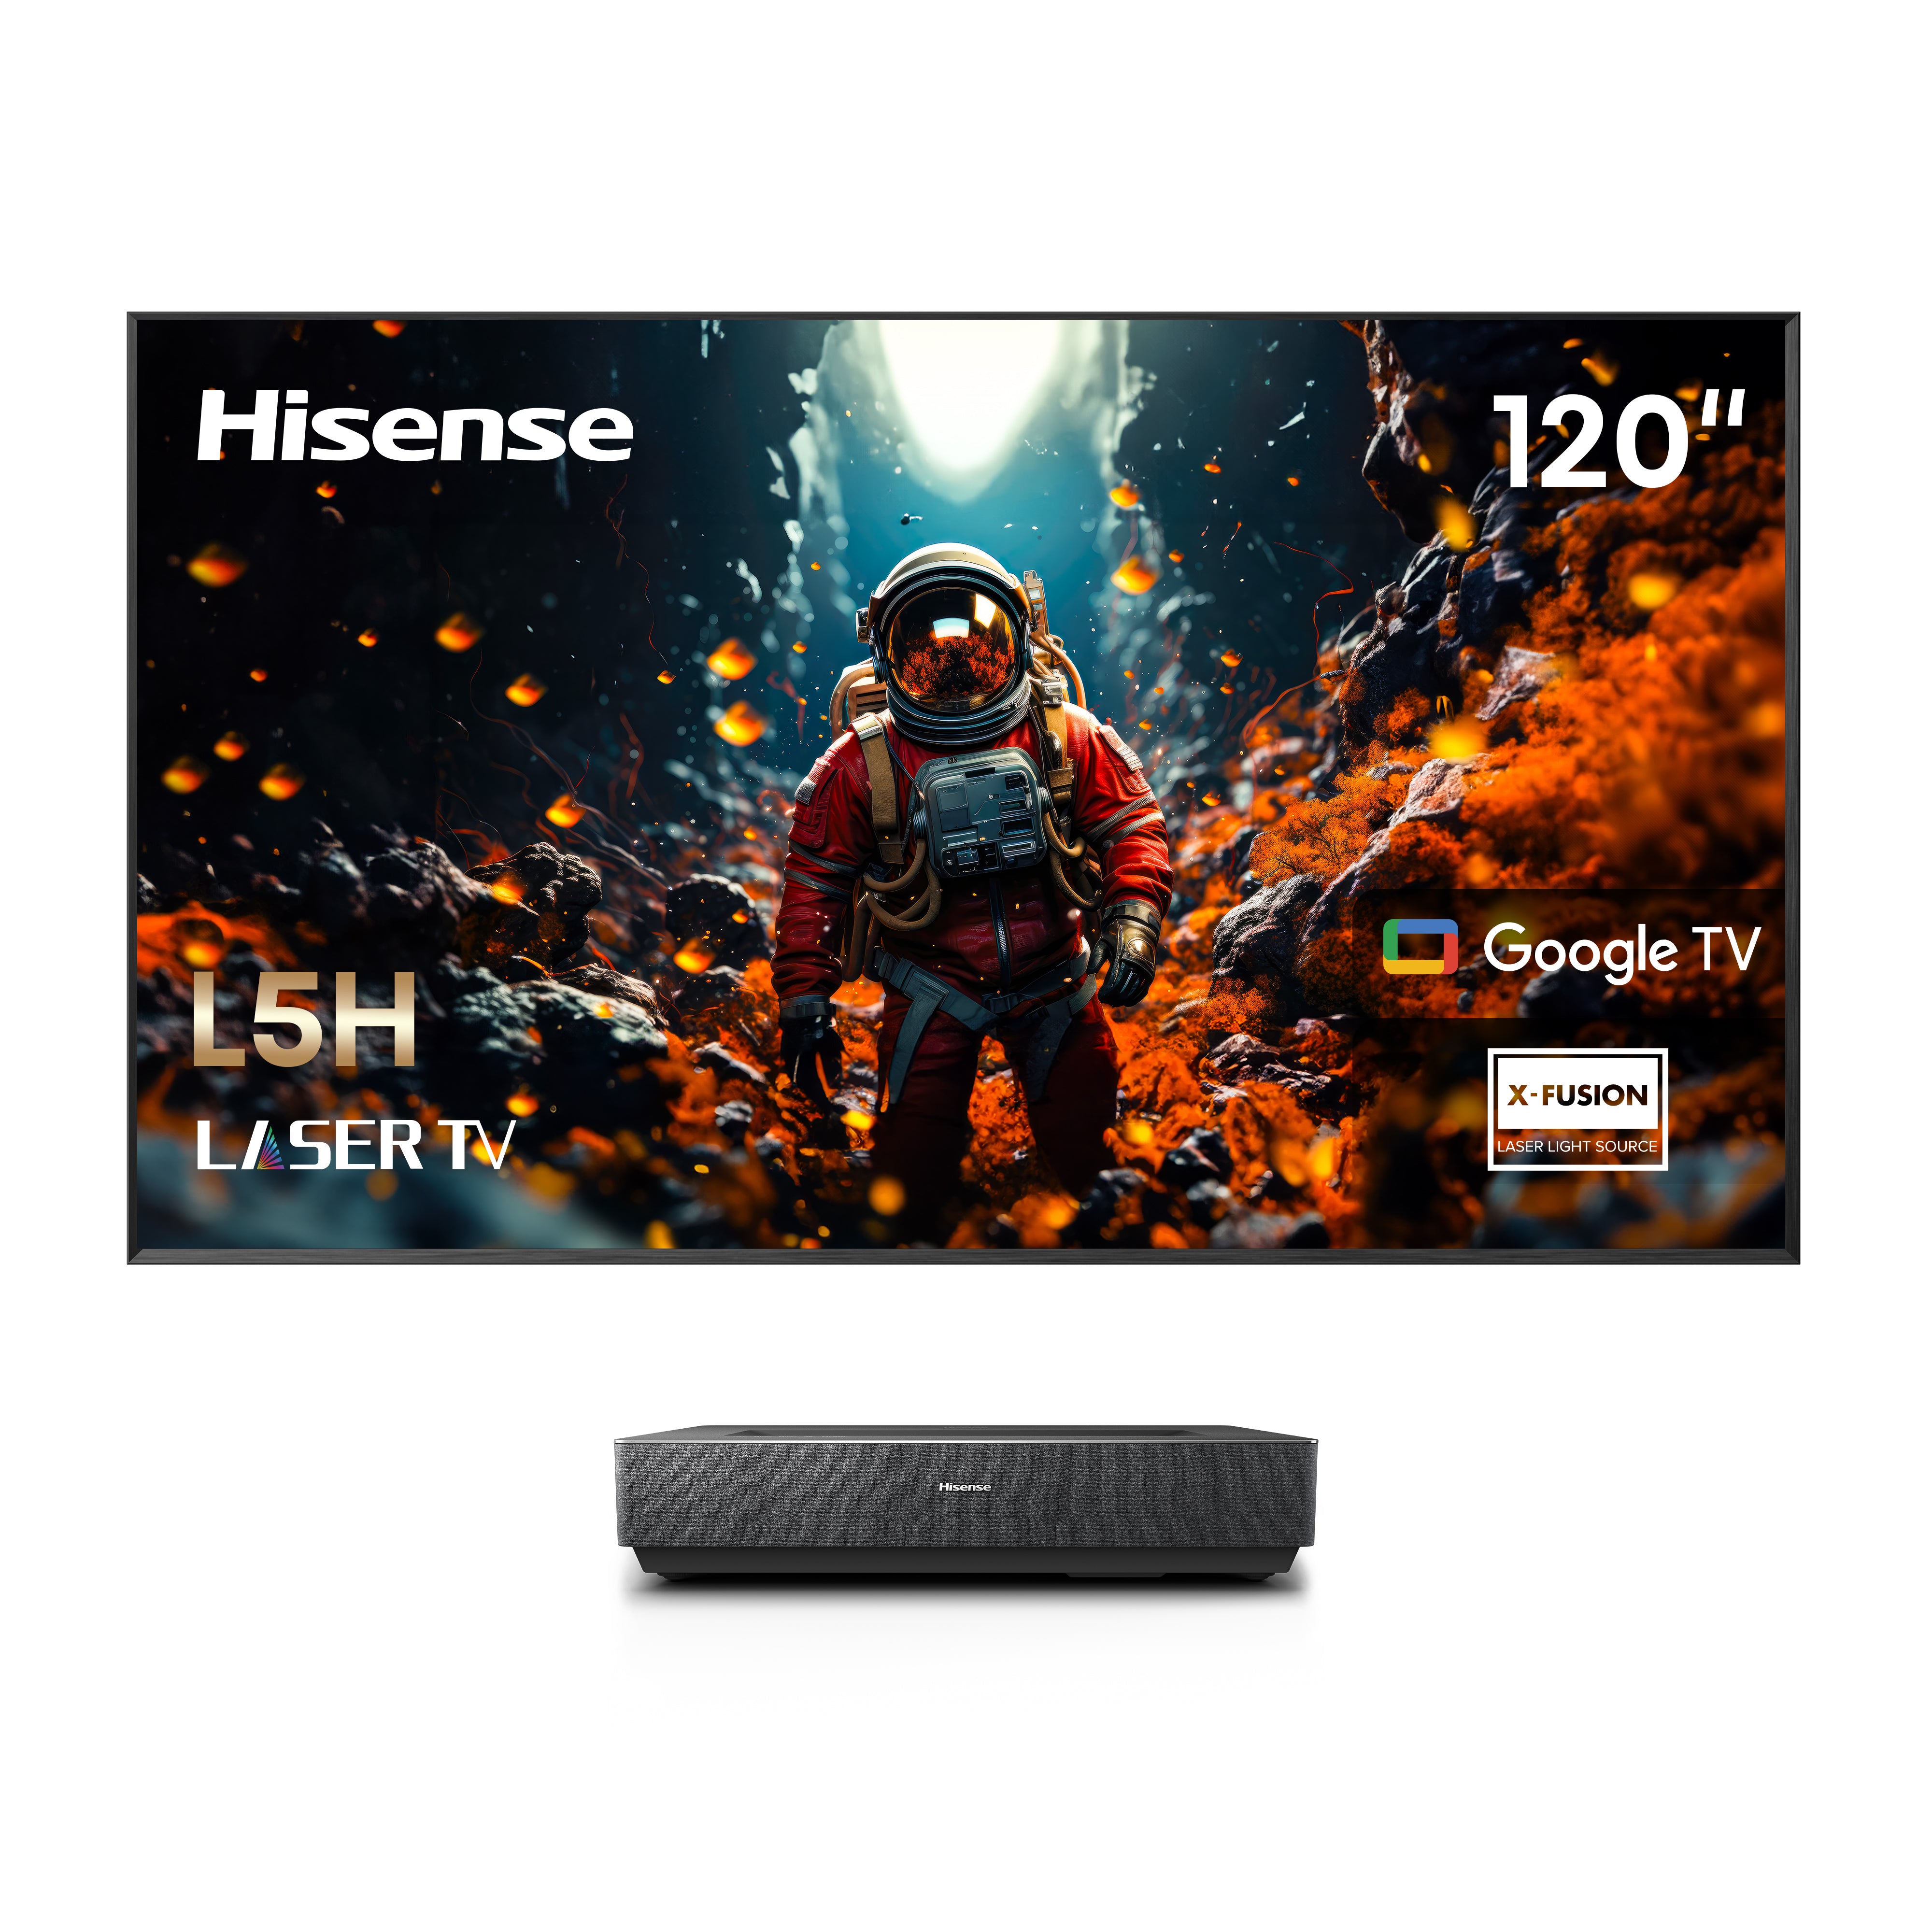 Hisense 120" L5H Ultra Short Throw 4K Laser TV